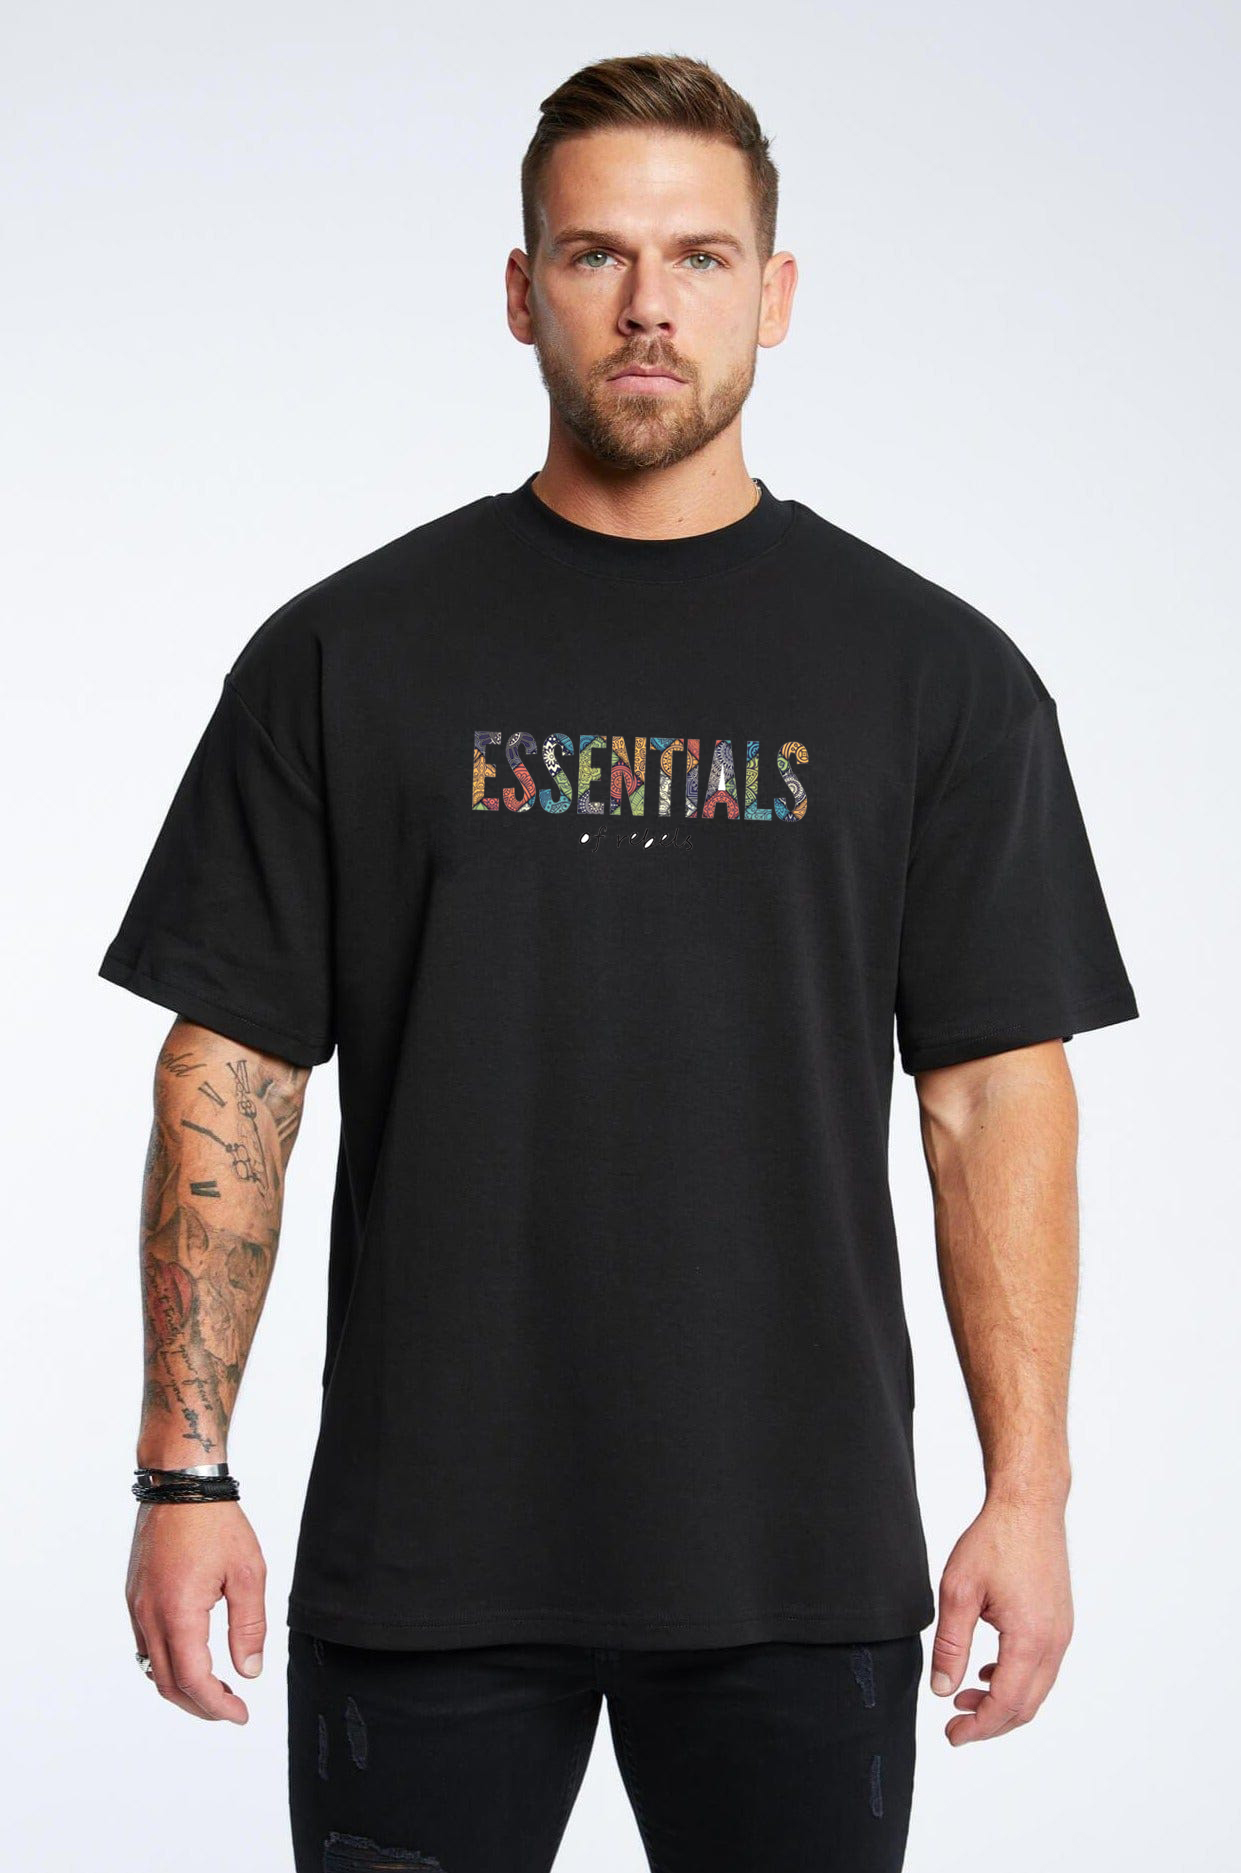 İnsane Minds Essentials Baskılı Bol Kalıp Oversize T-shirt